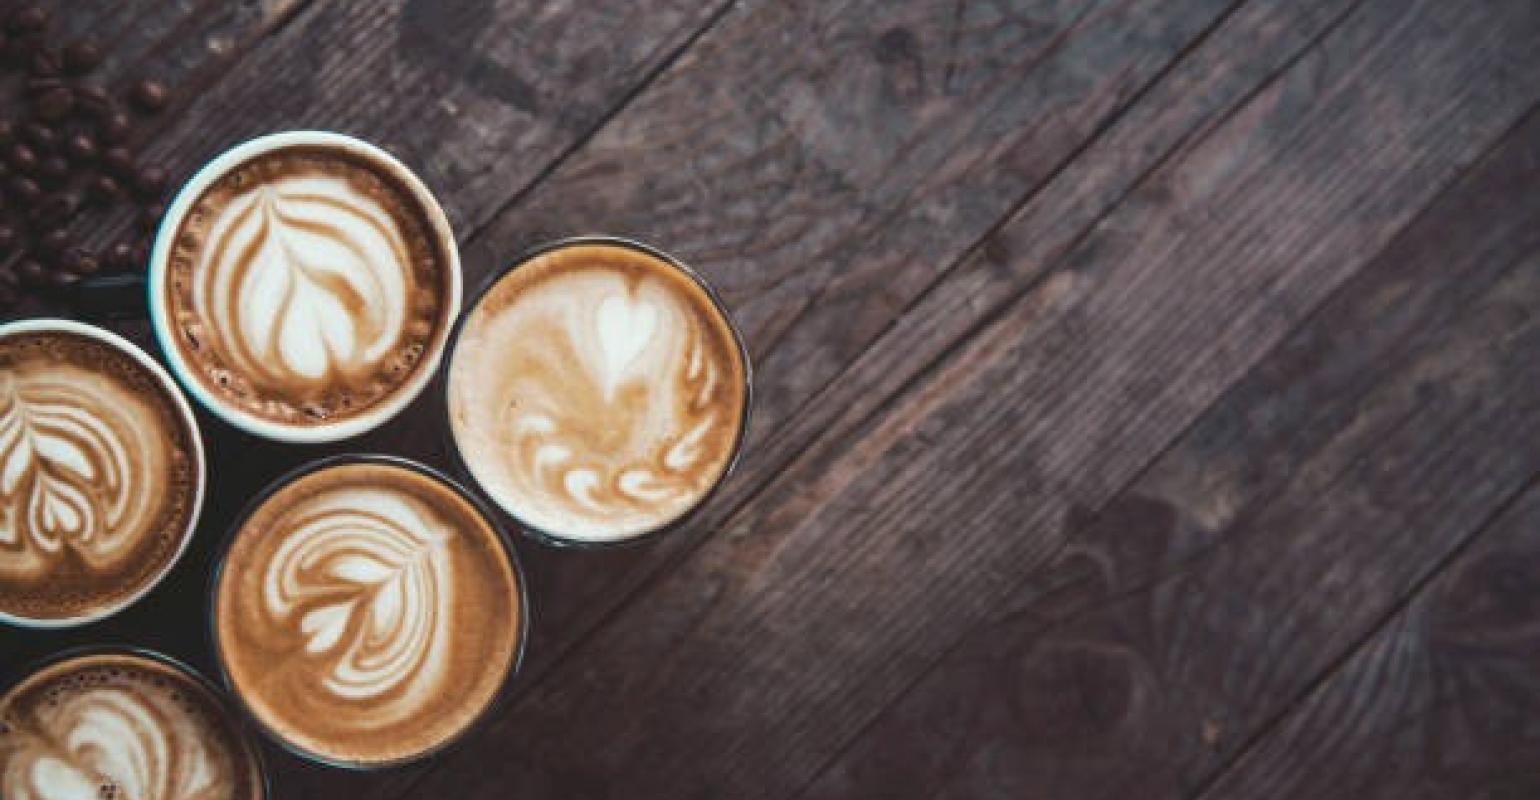 latte art training cup  Coffee, Tea, Community